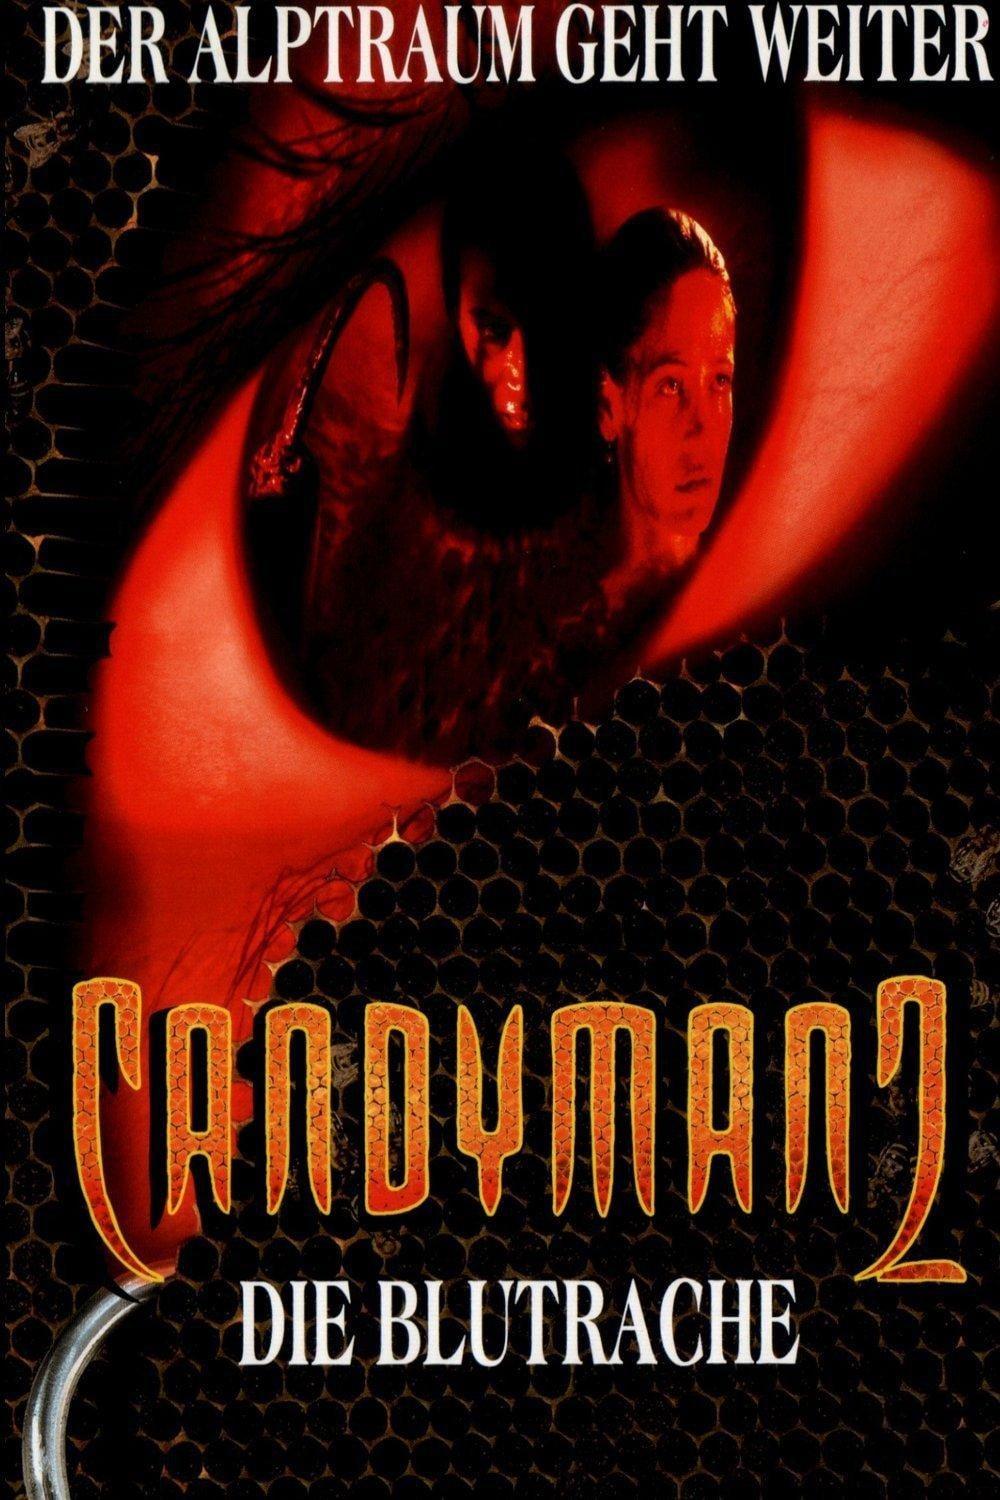 Candyman 2 - Die Blutrache poster